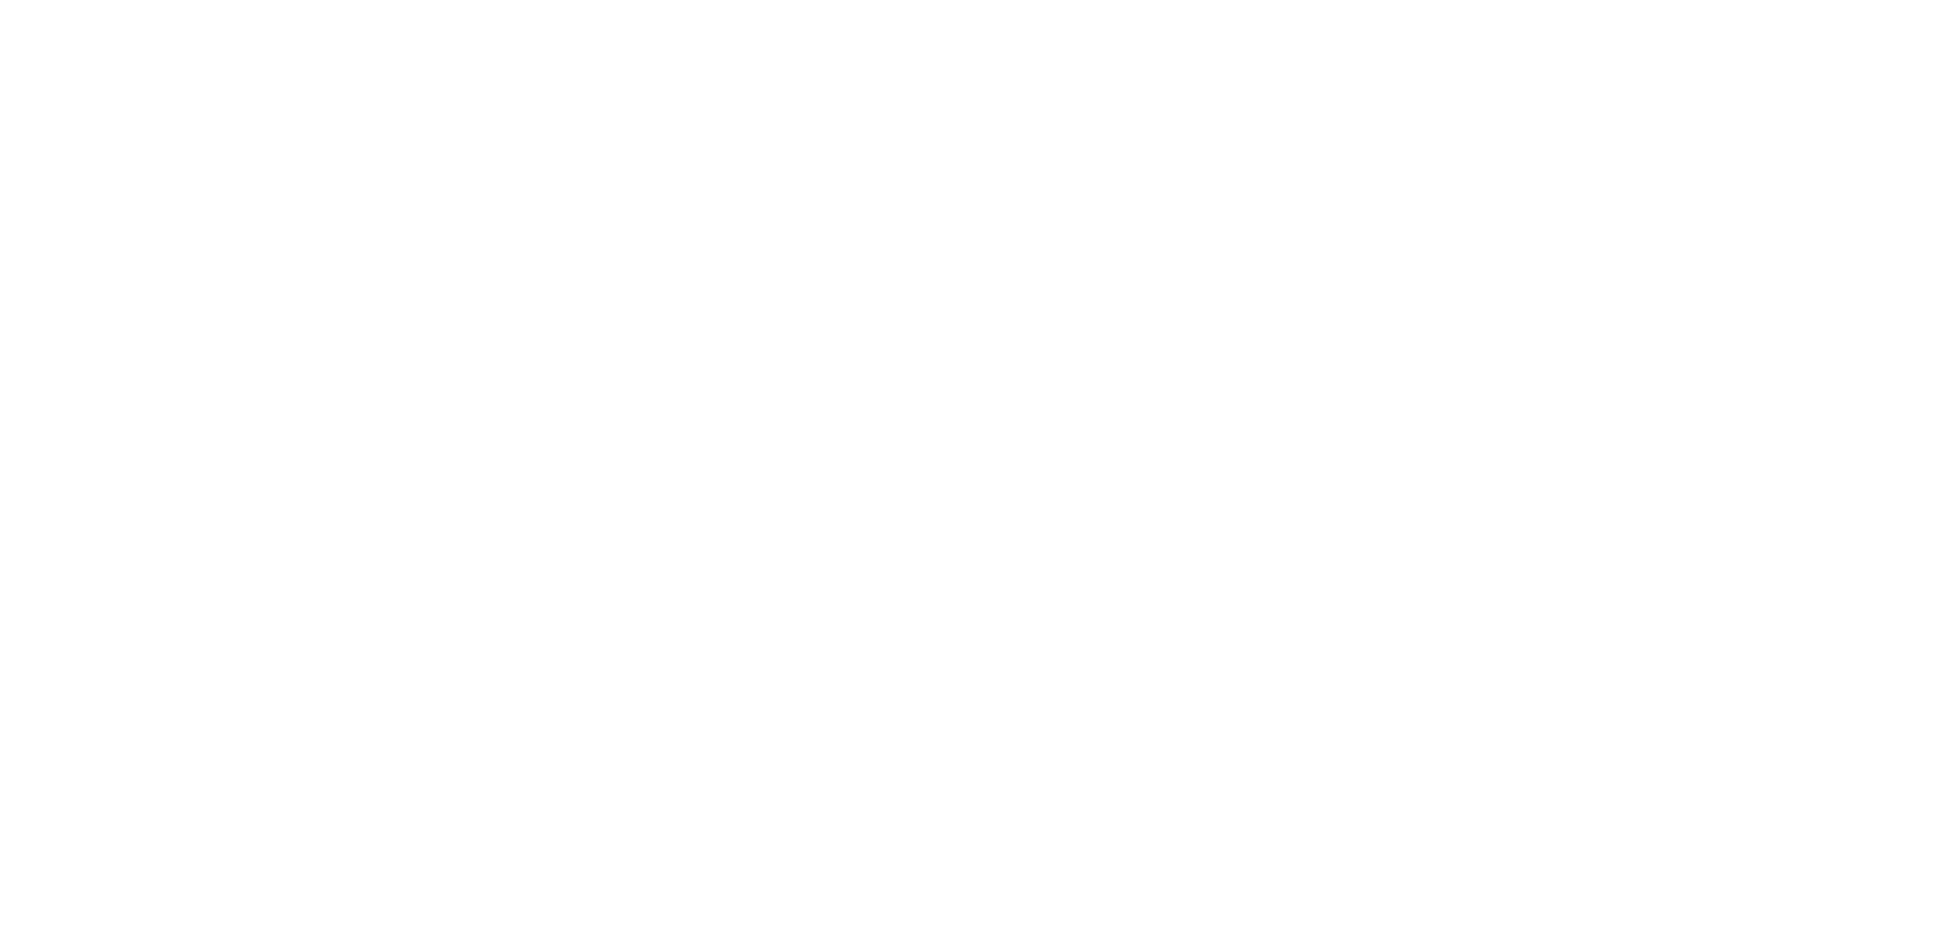 Anawim logo in white